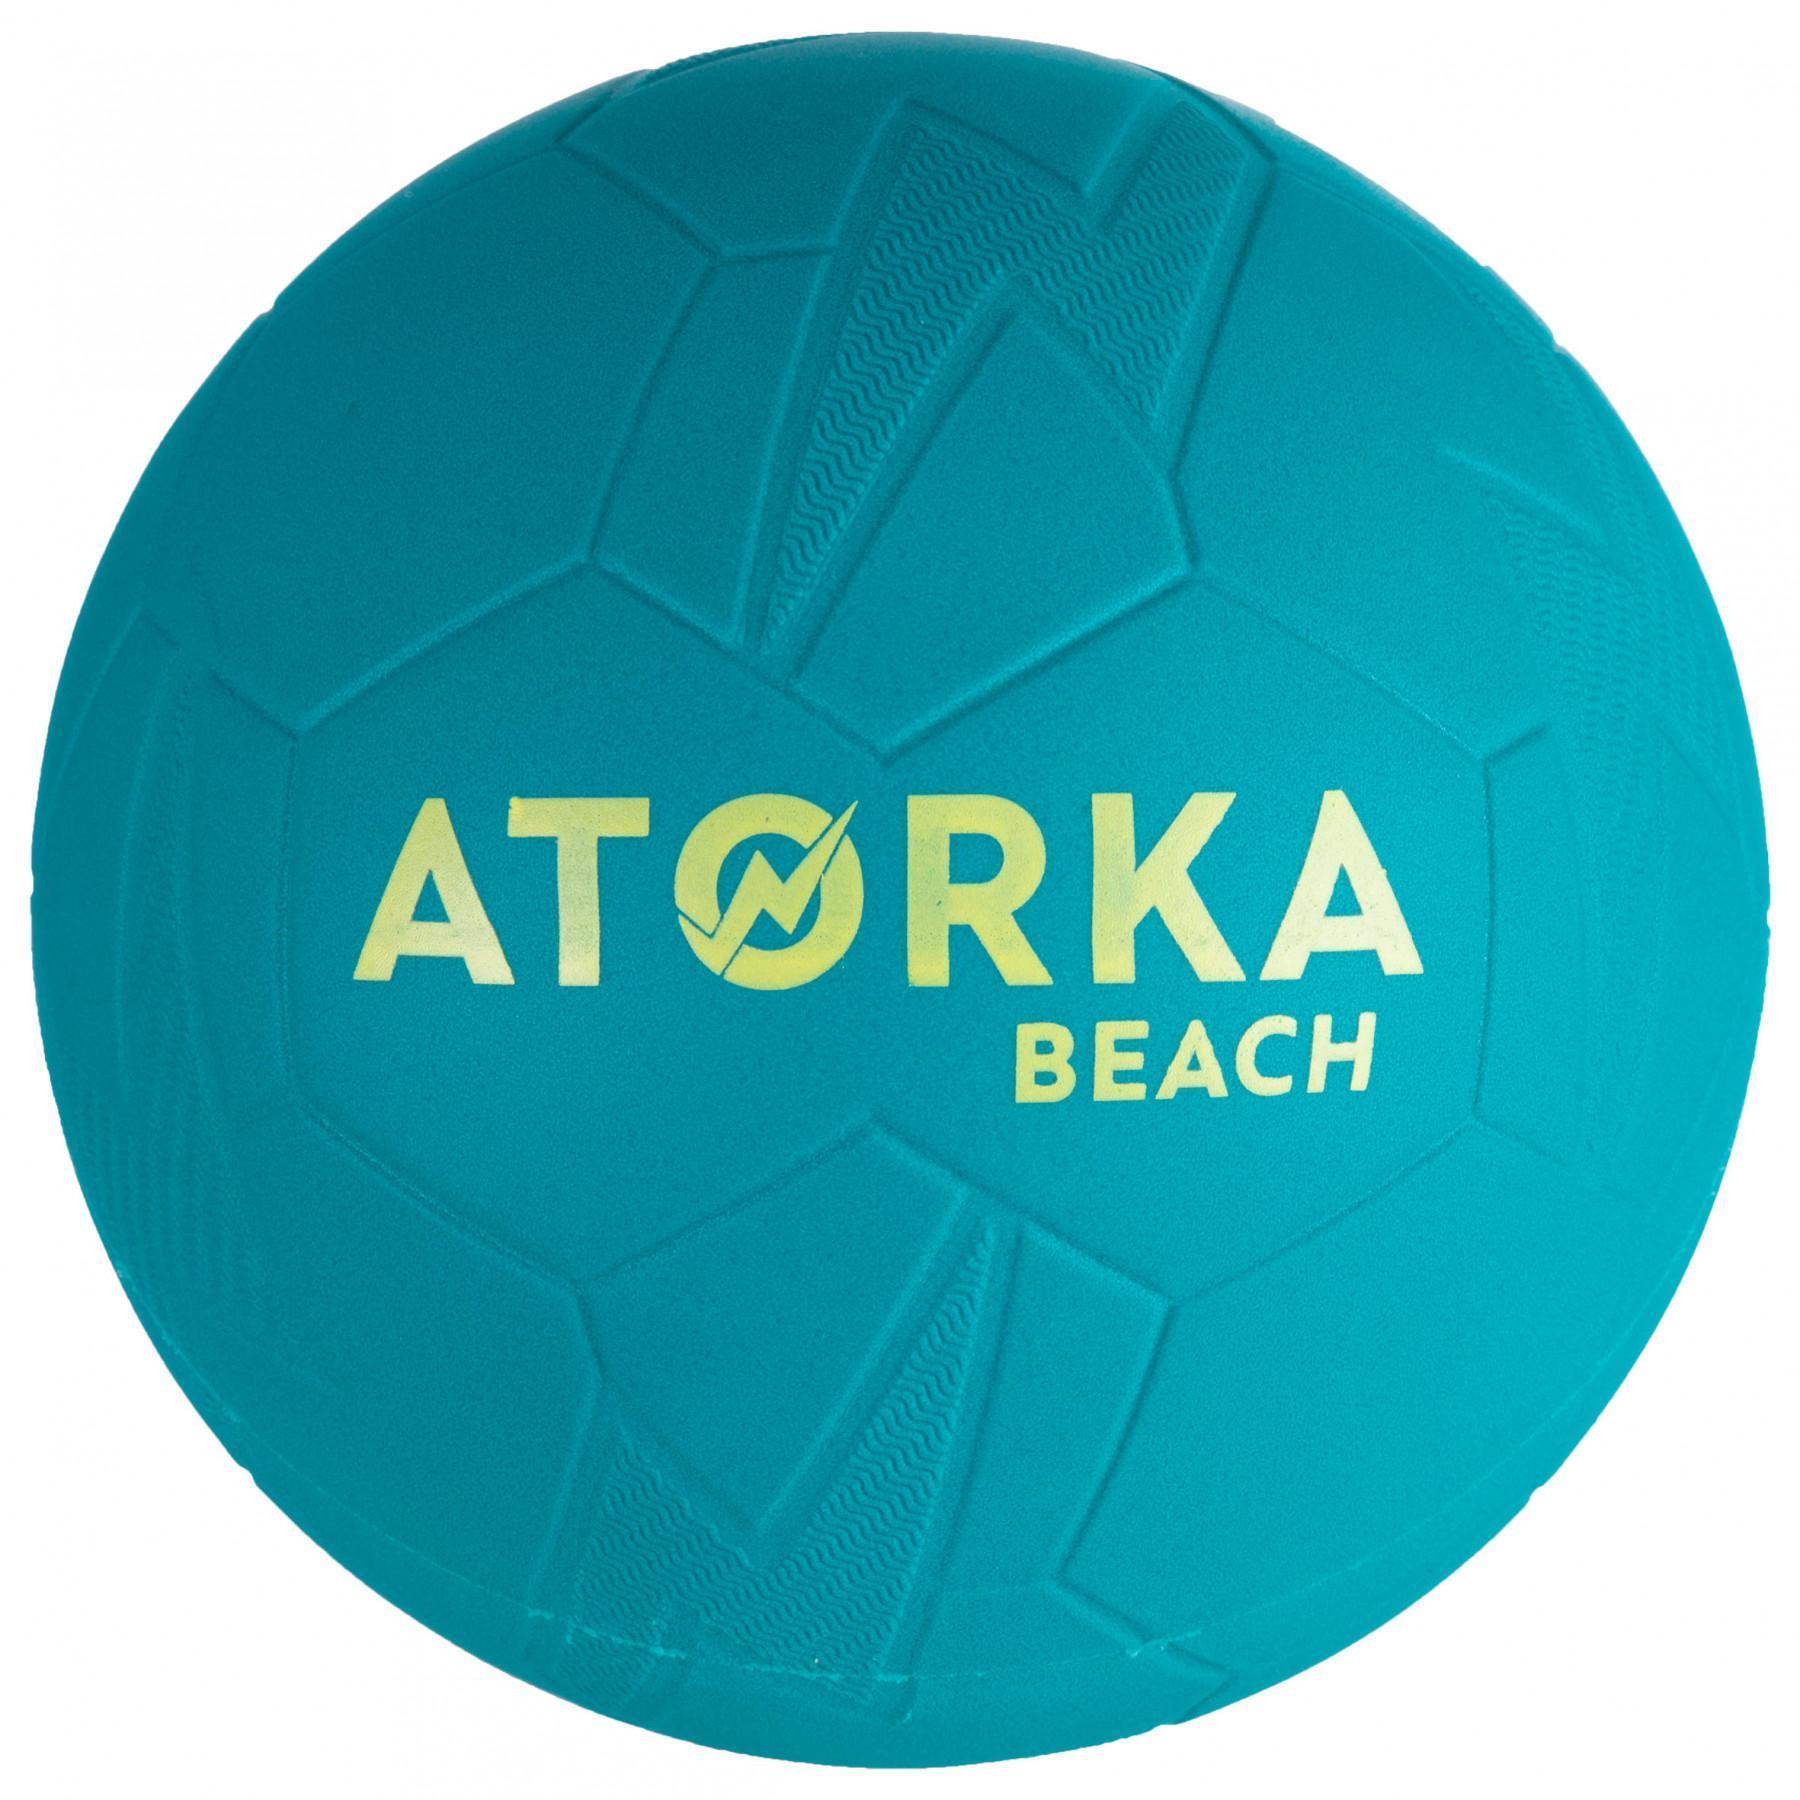 Lot de 3 Ballons de Beach Handball Atorka HB500B